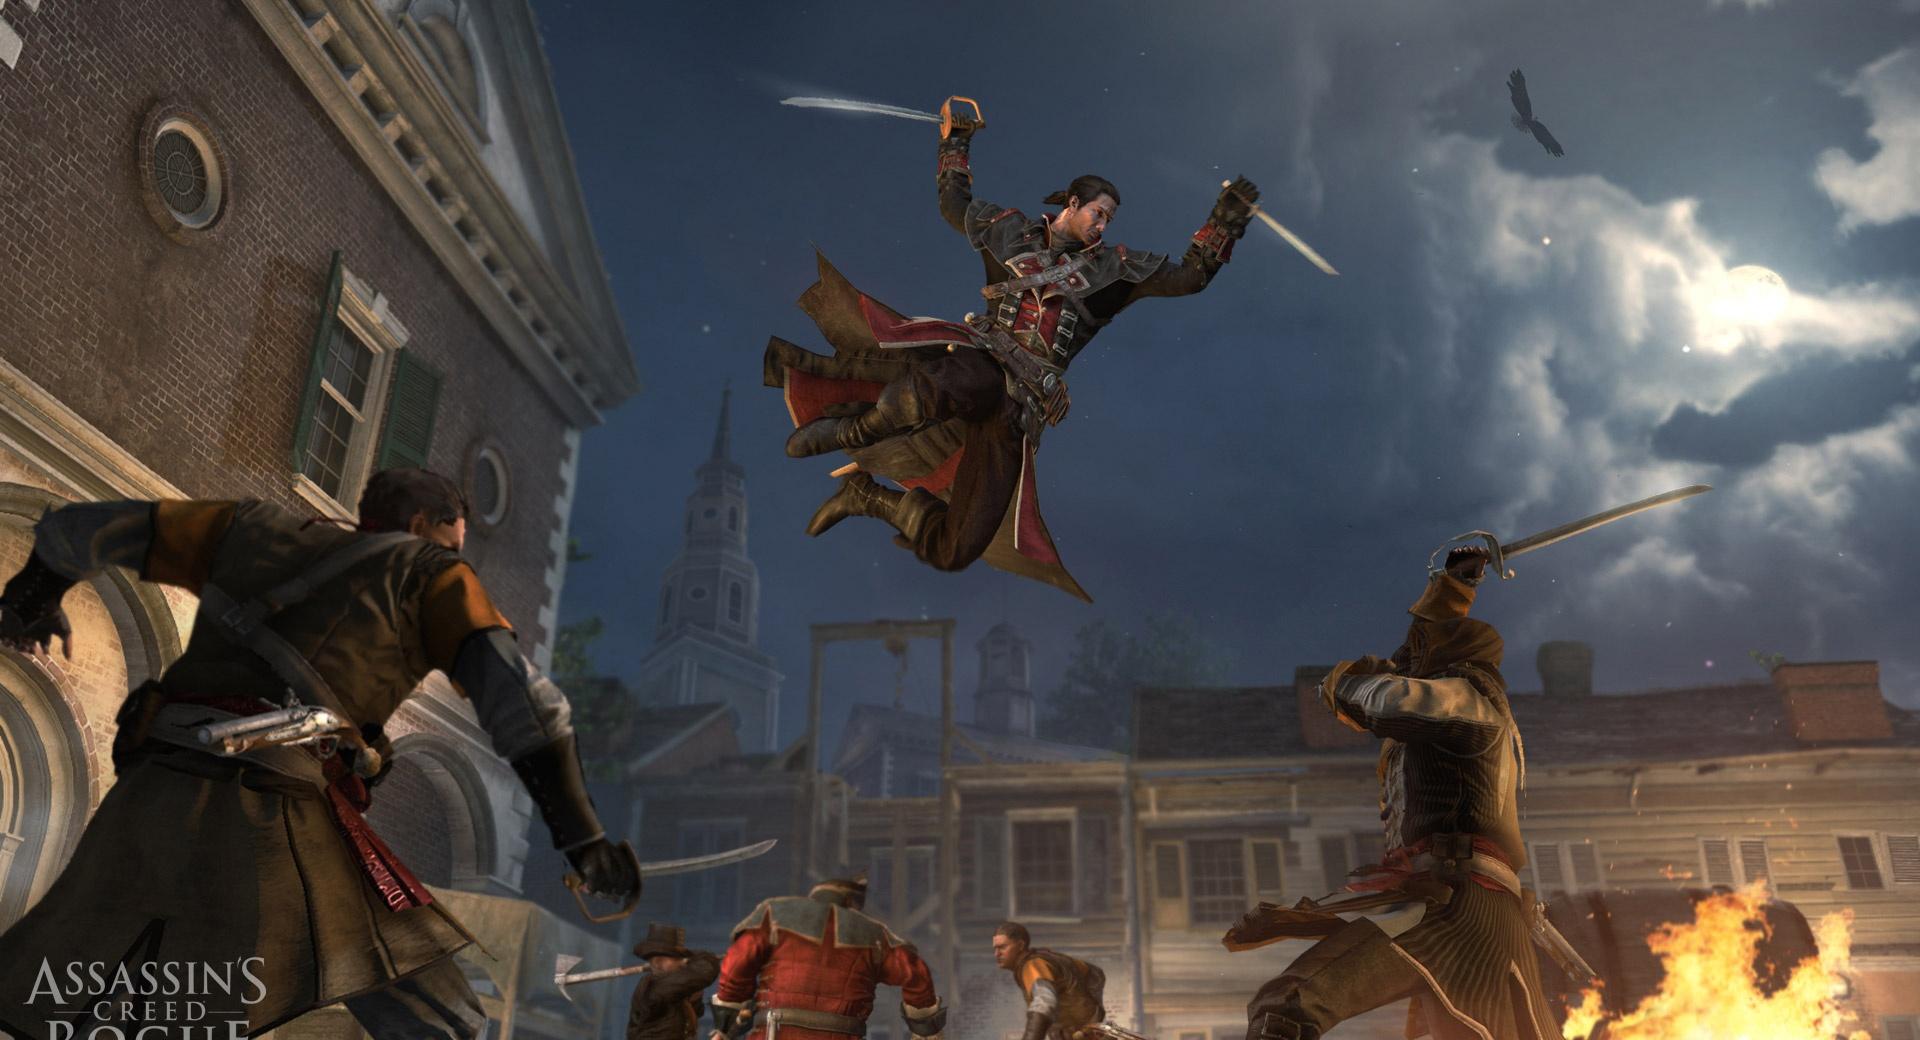 Assassins Creed Rogue Jump to Kill wallpapers HD quality